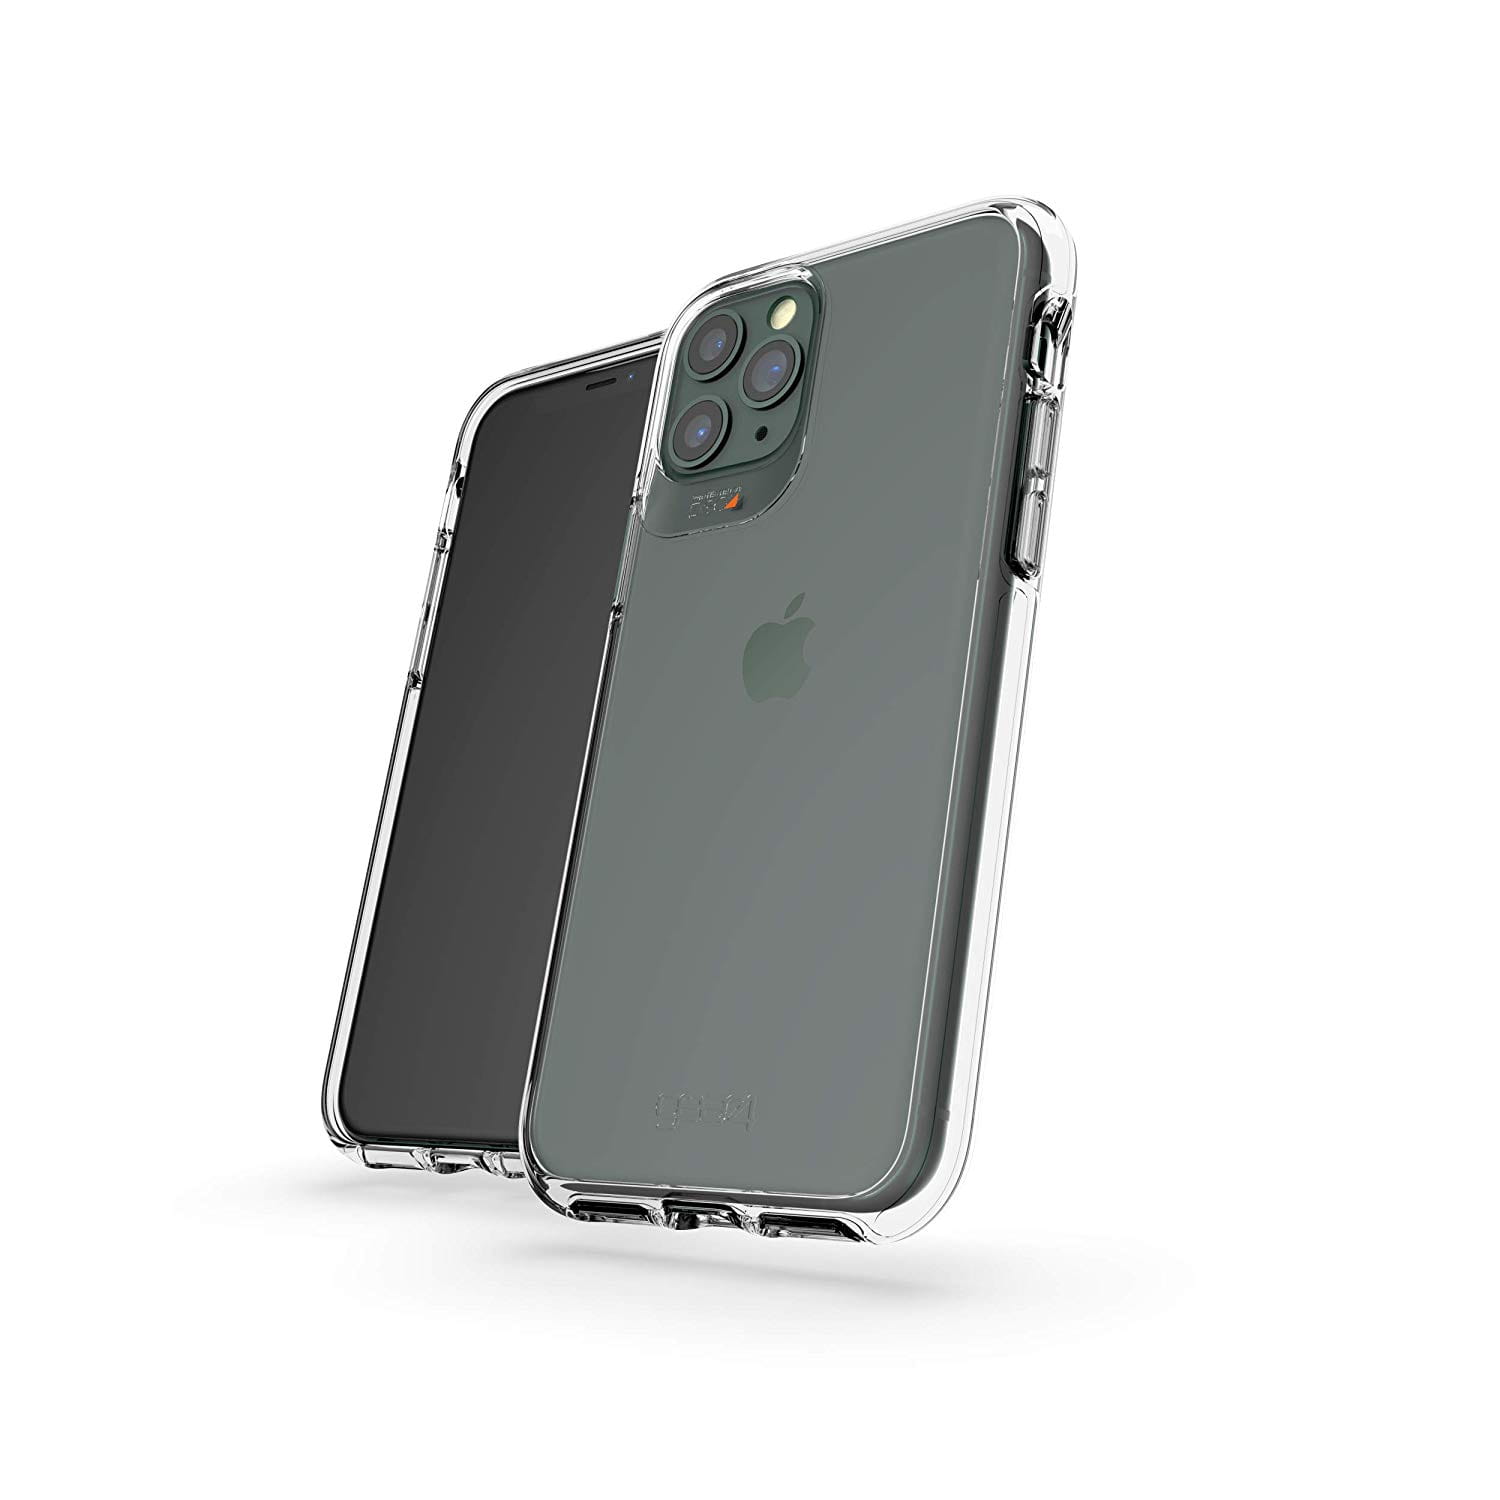 Schutzhülle Gear4 aus der Serie Crystal Palace für iPhone 11 Pro, transparent.